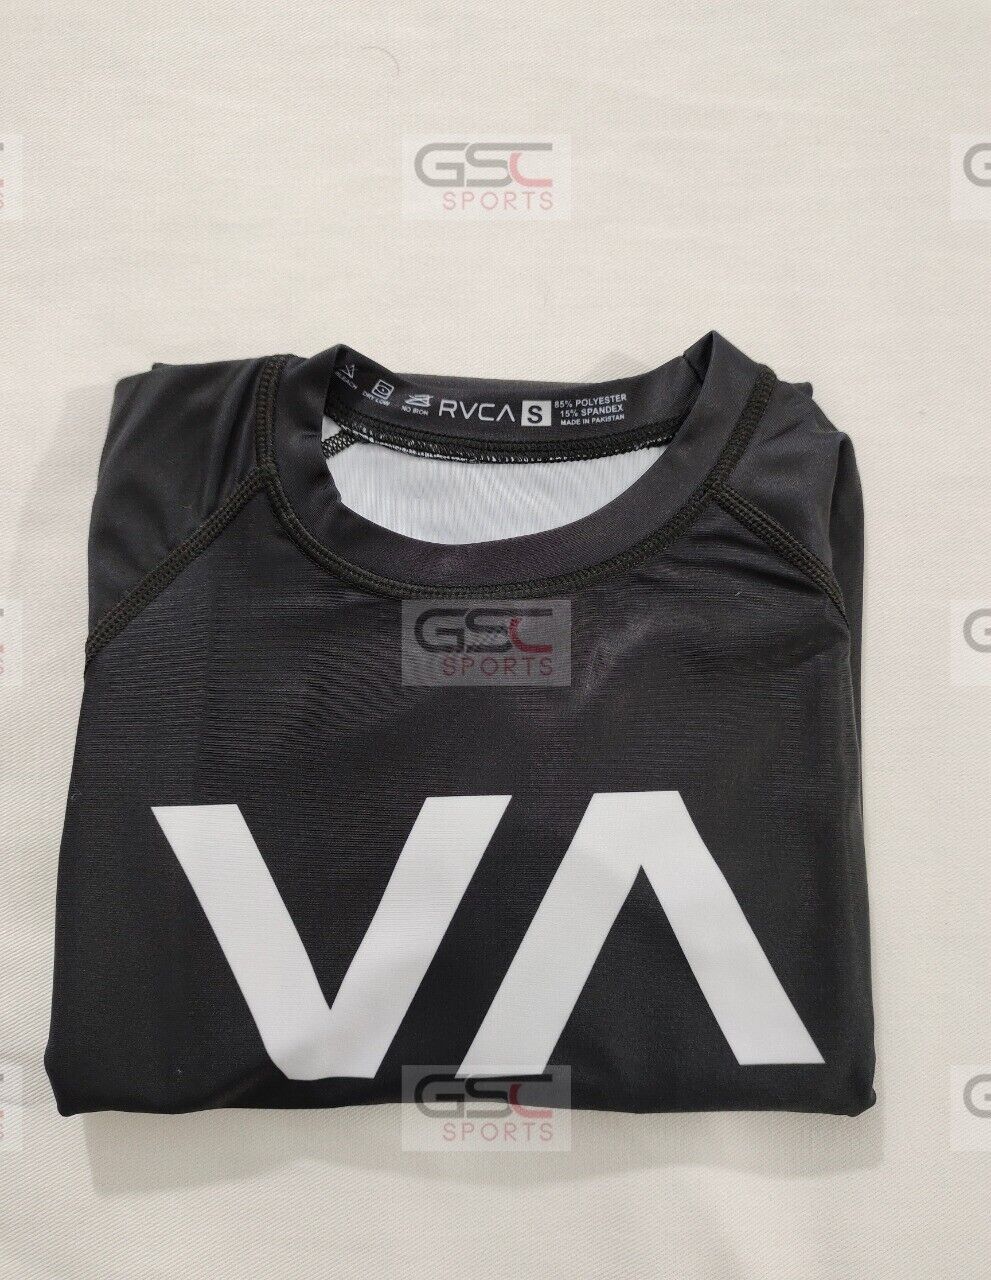 RVCA VA Rush Guard Bjj Compression Shirt XL Size With Tag Card Brand New Shoyoroll batch 60 - фотография #9